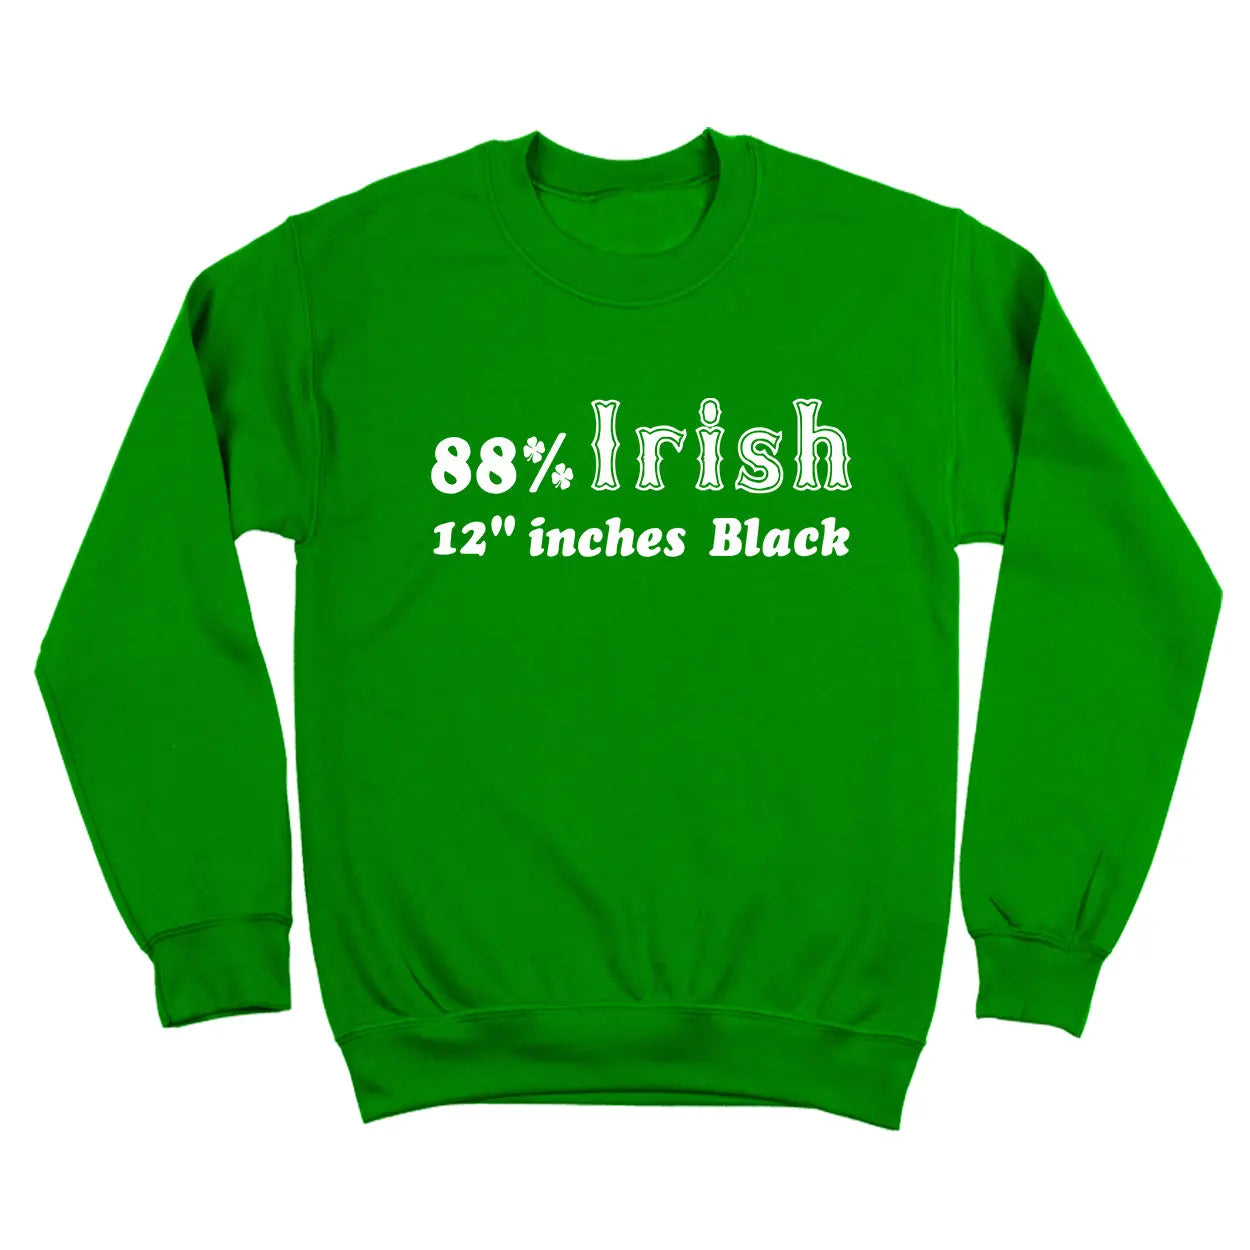 88 Irish 12 Inches Black Tshirt - Donkey Tees